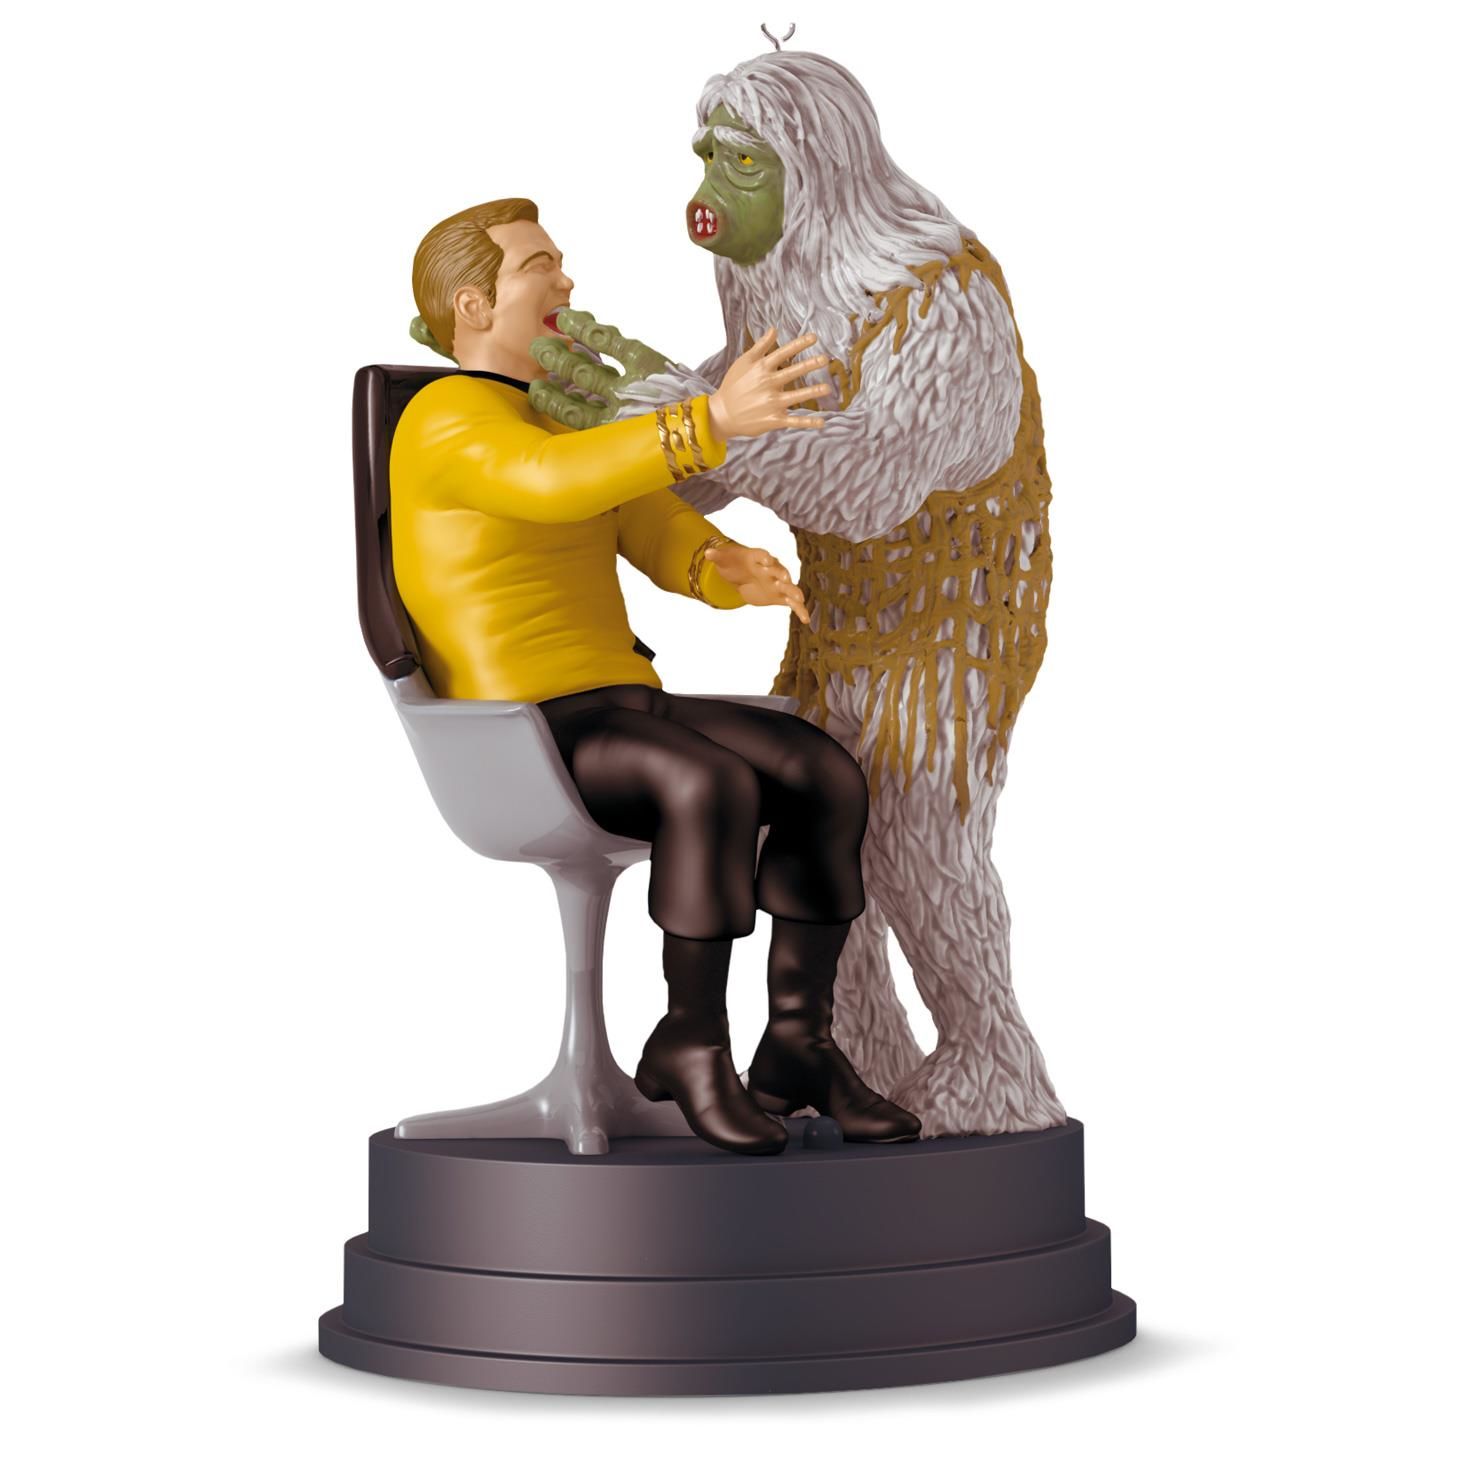 Hallmark Has Truly Outdone Itself With This New Star Trek Keepsake Ornament